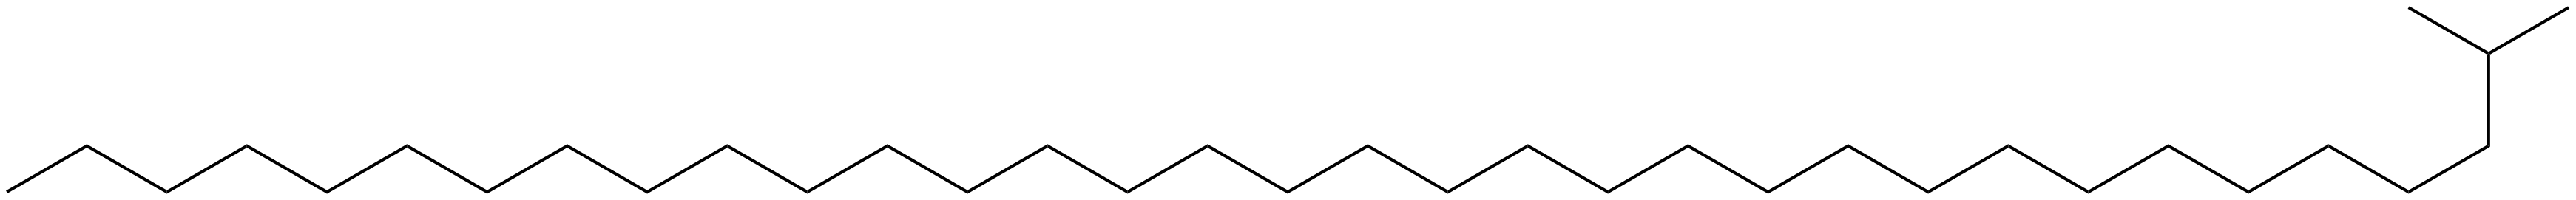 Image of 2-methyltetratriacontane